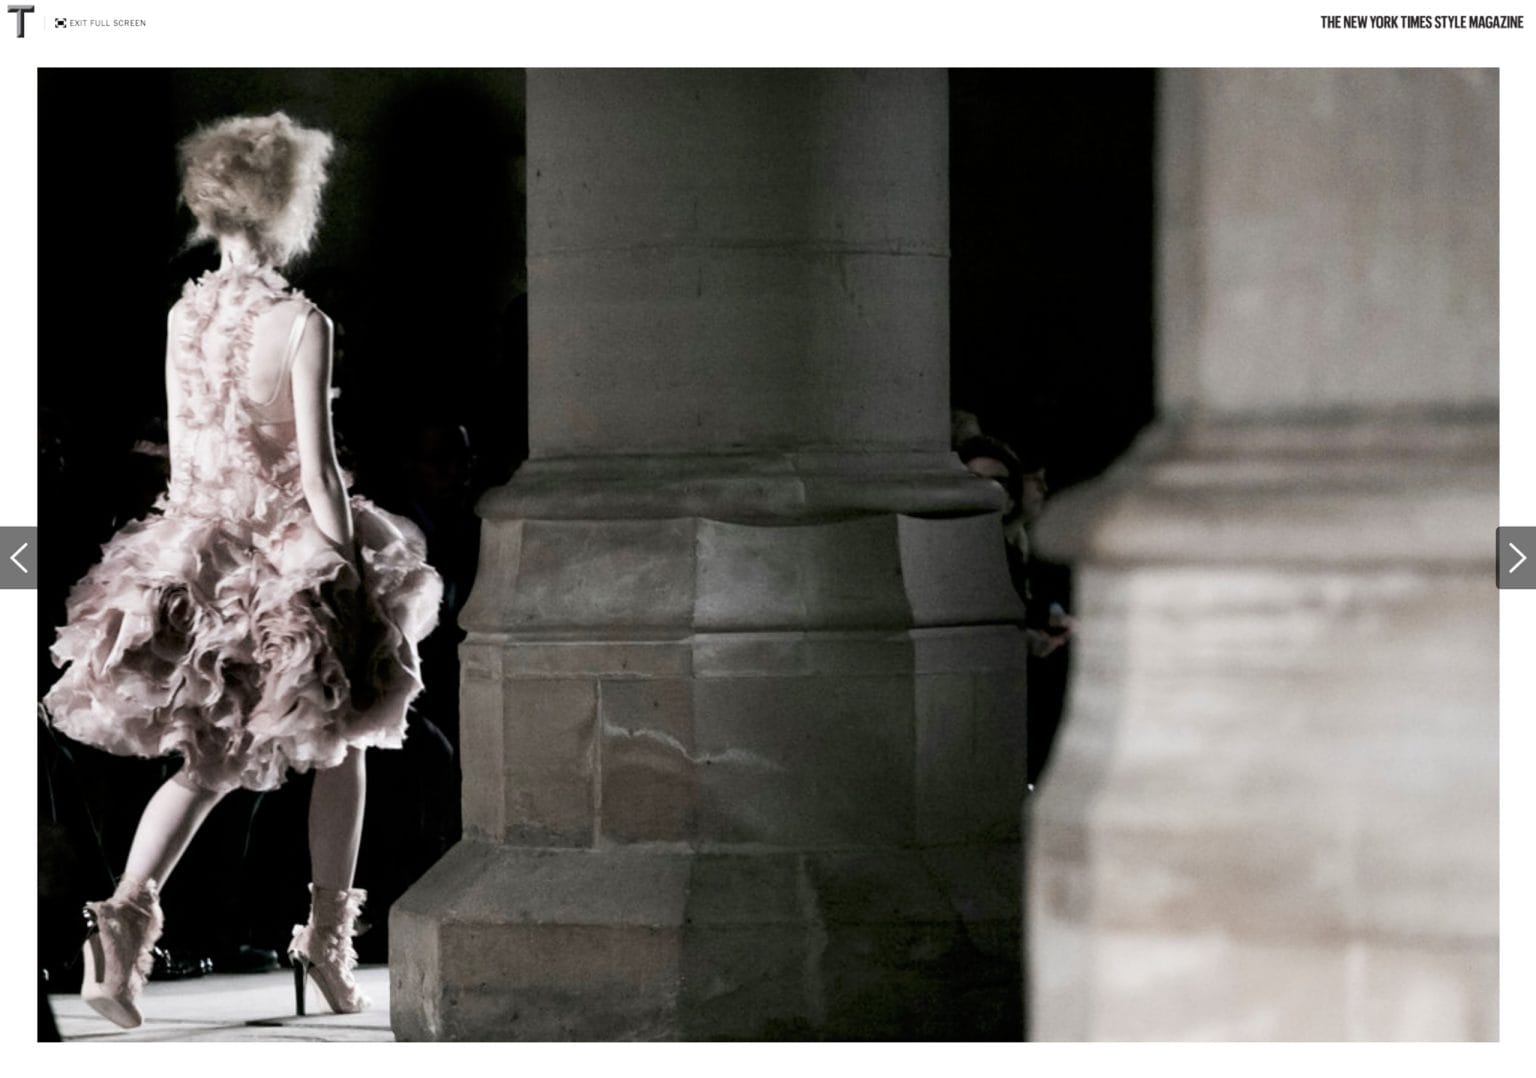 Alexander McQueen Fashion Show, Photo by Valerio Mezzanotti for The New York Times